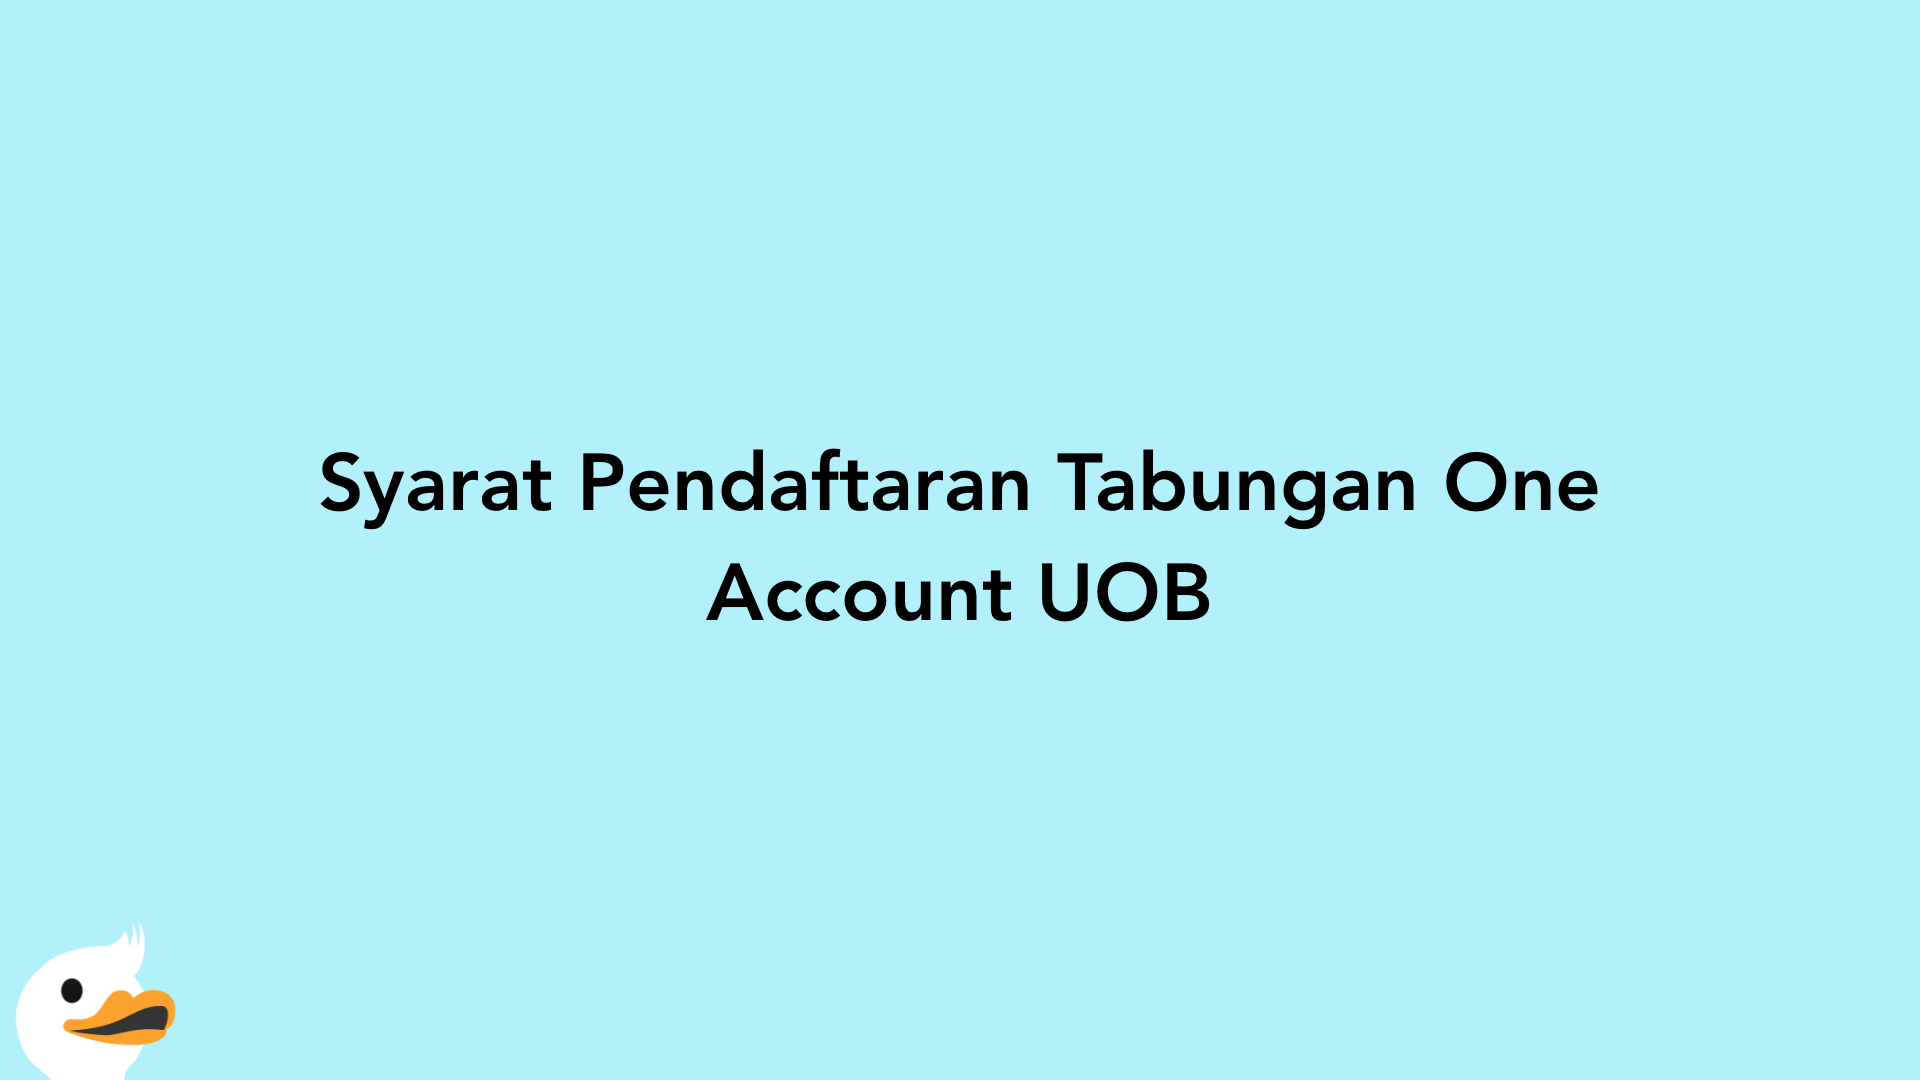 Syarat Pendaftaran Tabungan One Account UOB